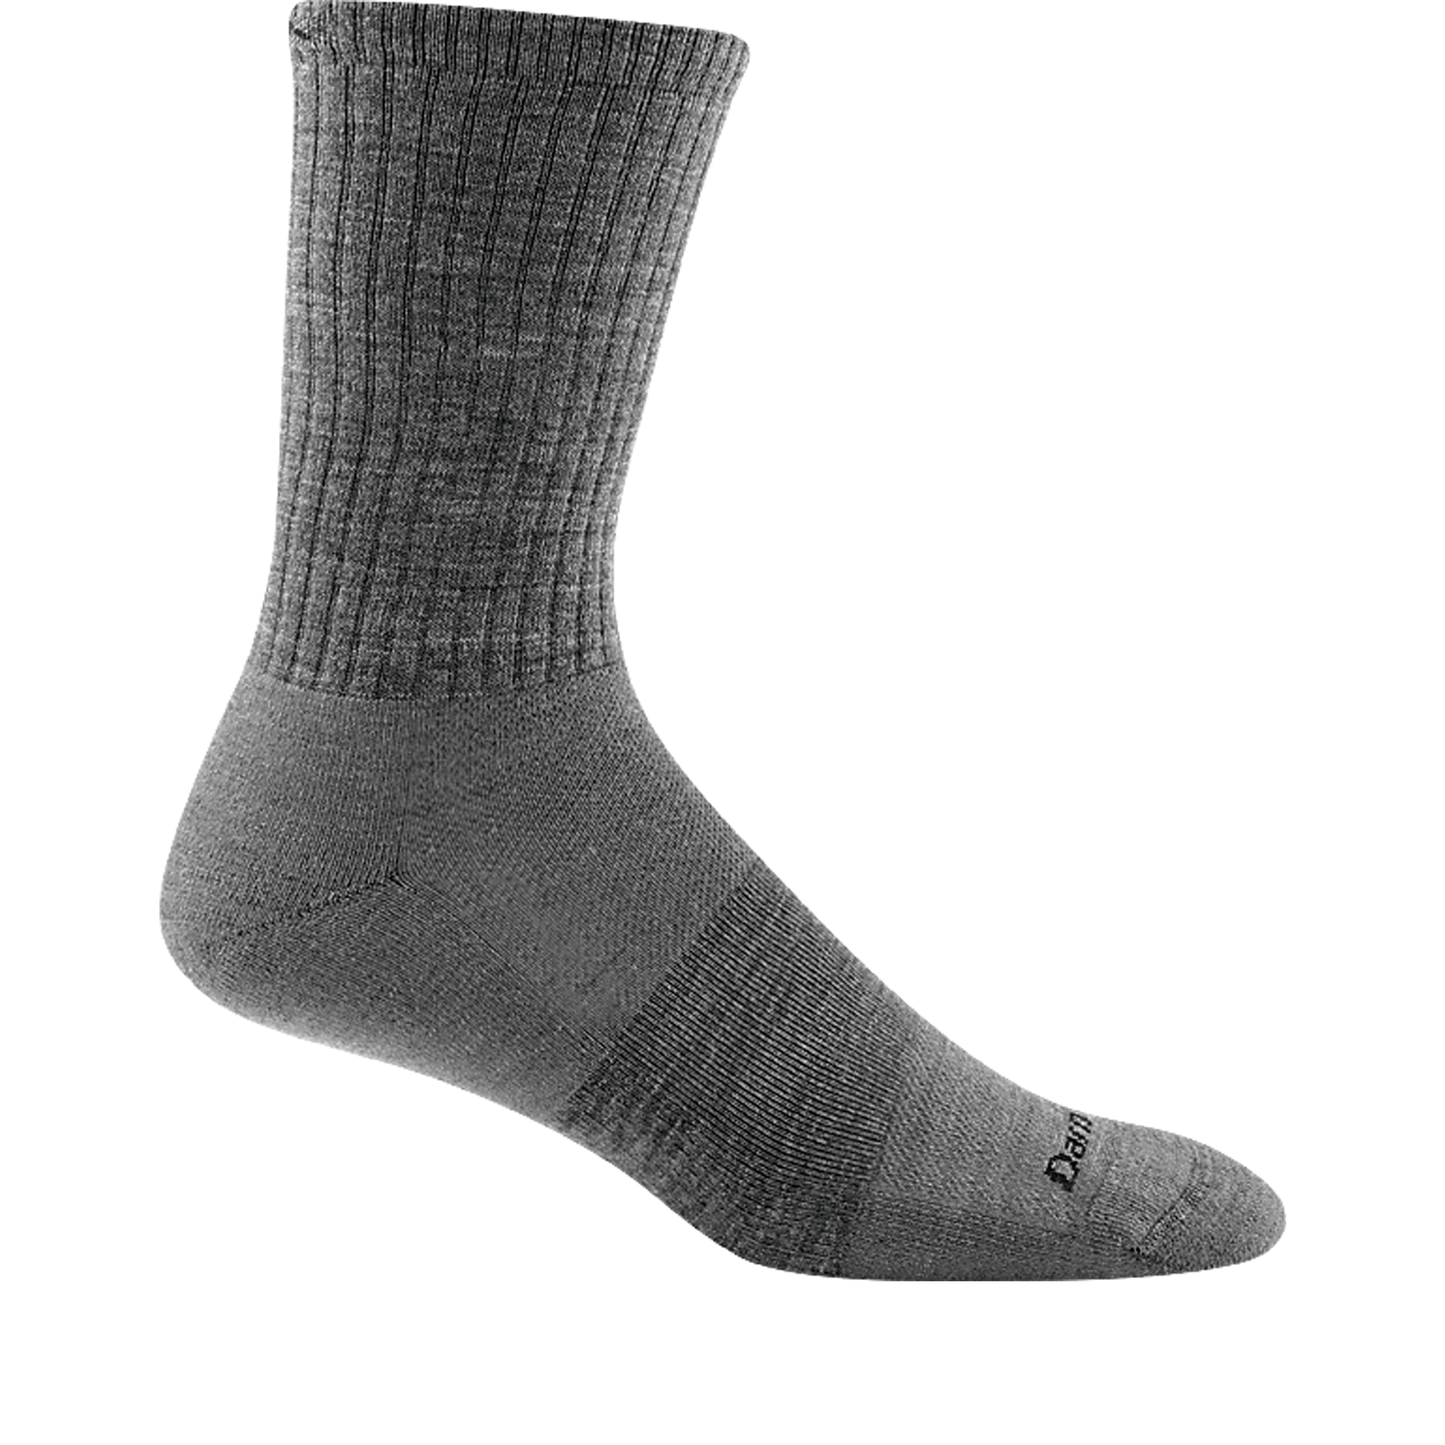 Darn Tough Men's The Standard Crew Lightweight Lifestyle Sock - Medium Grey